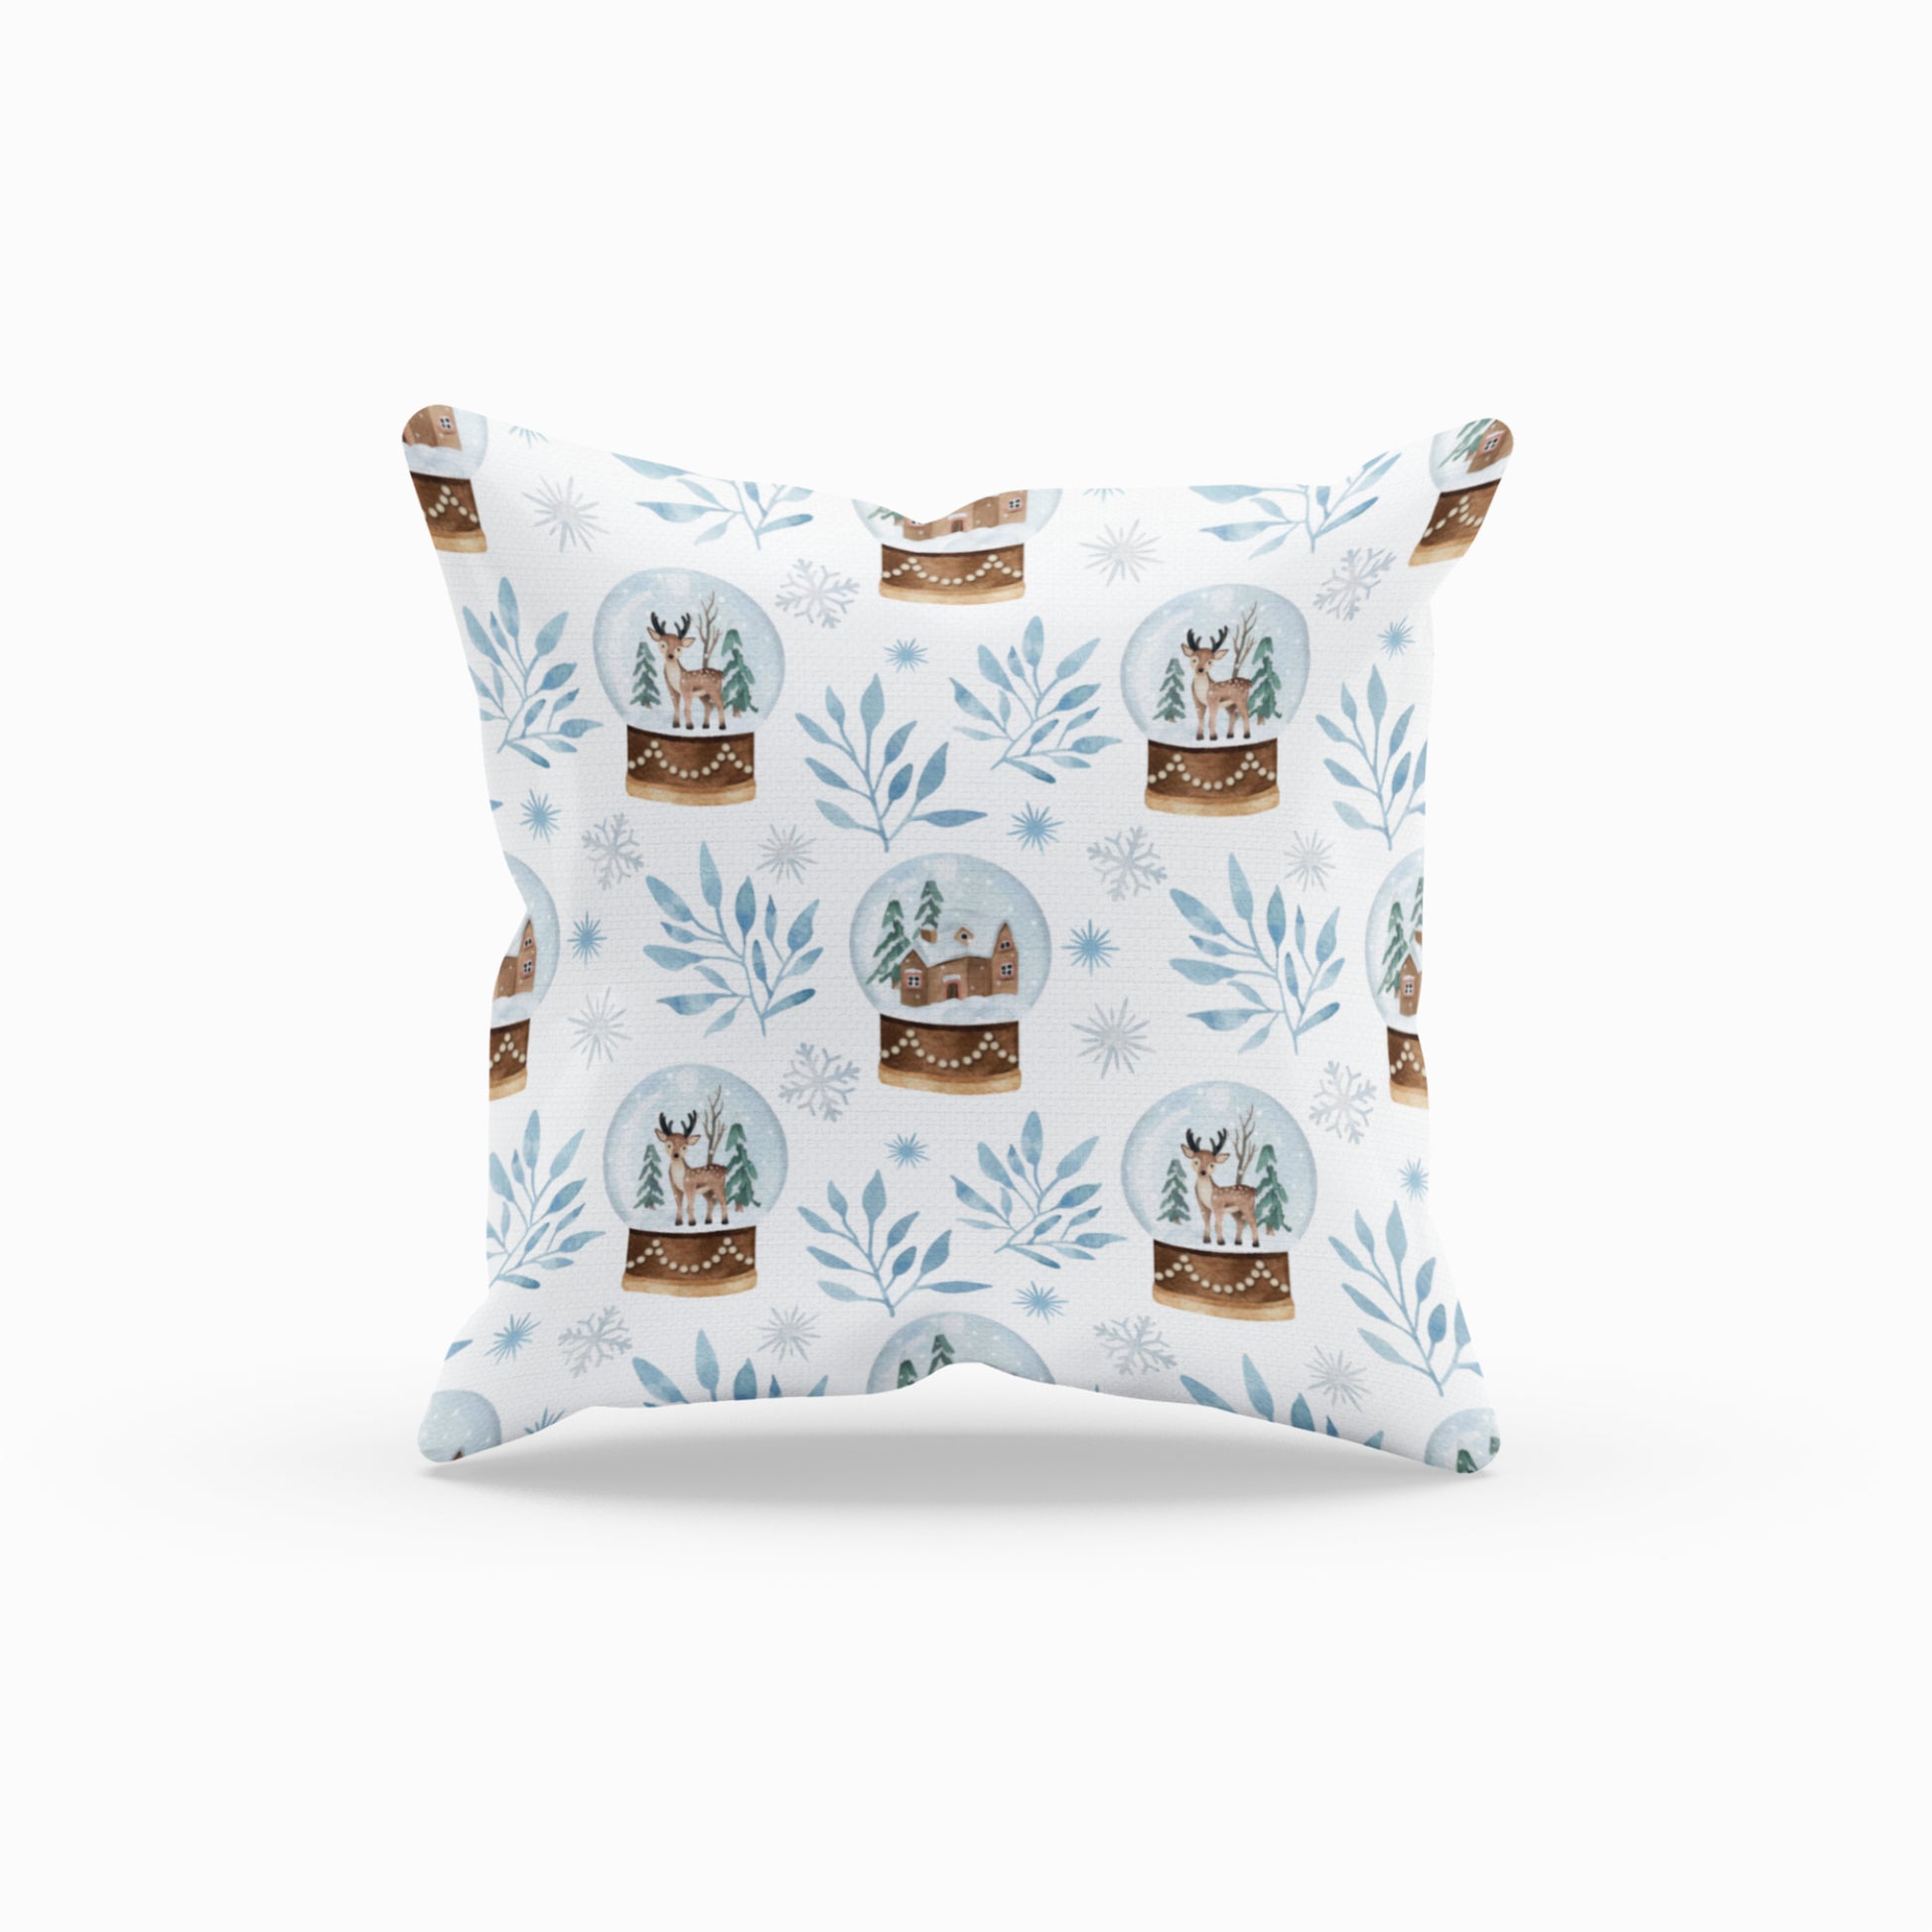 Winter Wonderland Theme Pillow for Cozy Decor